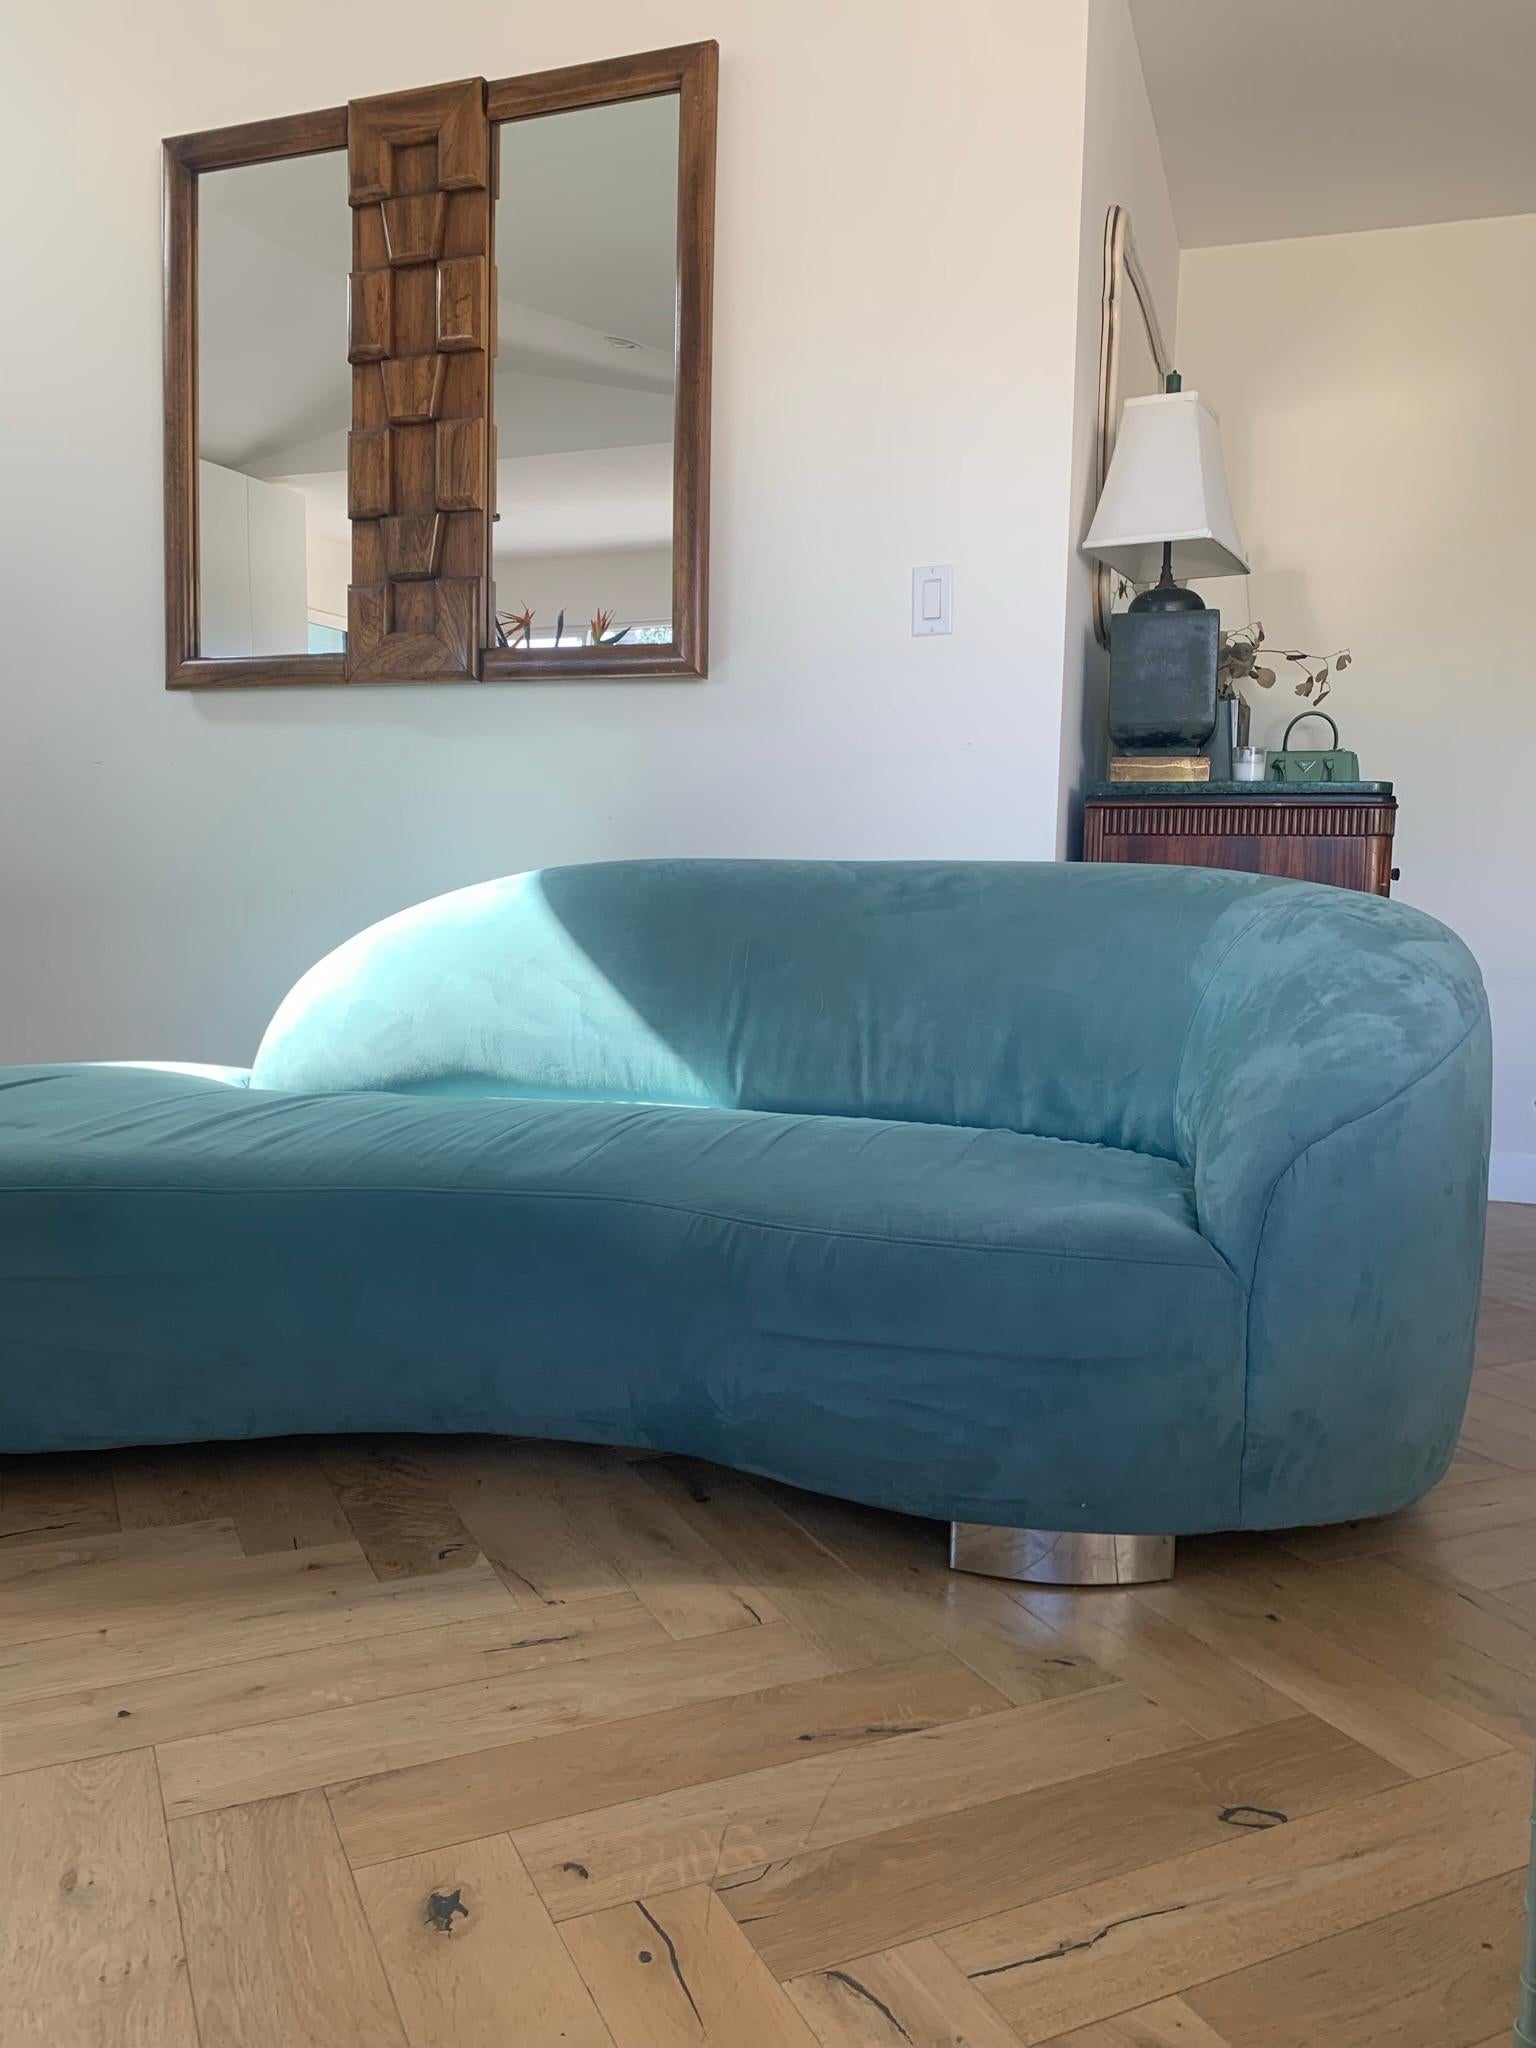 Upholstery Vladimir Karan Style Serpentine Biomorphic Sofa in Powder Blue